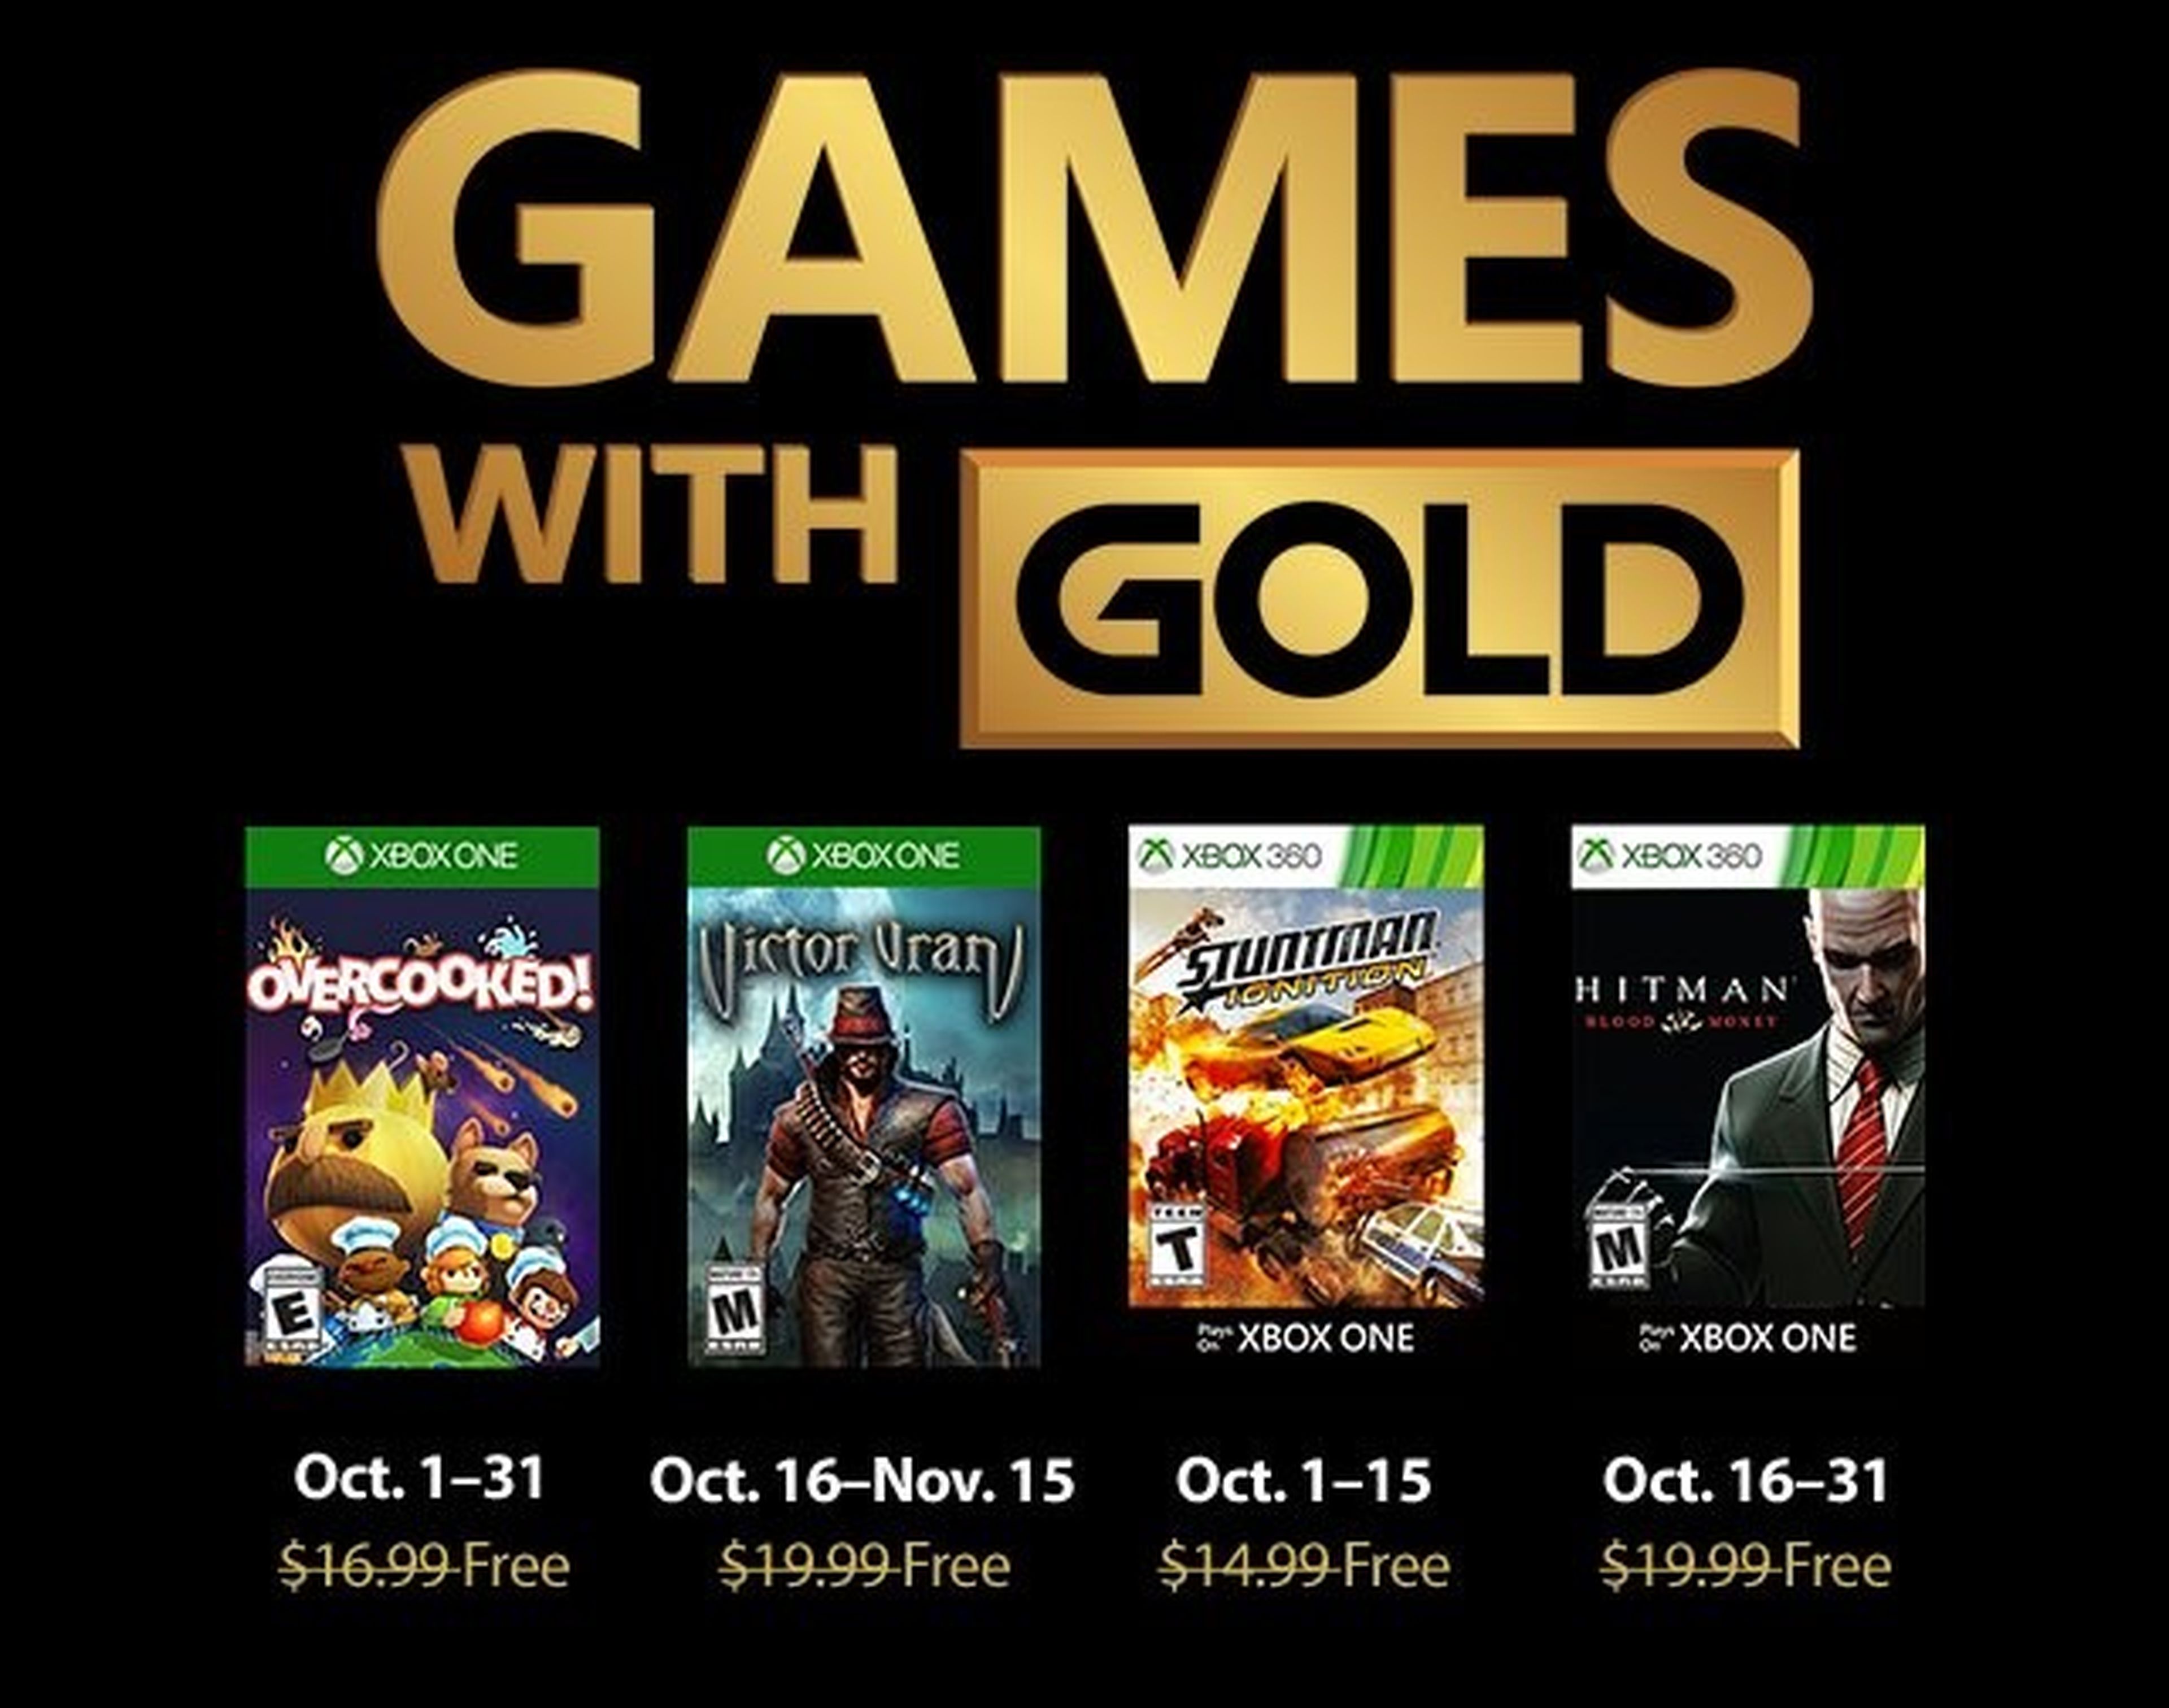 Gold game. Xbox бесплатный gold